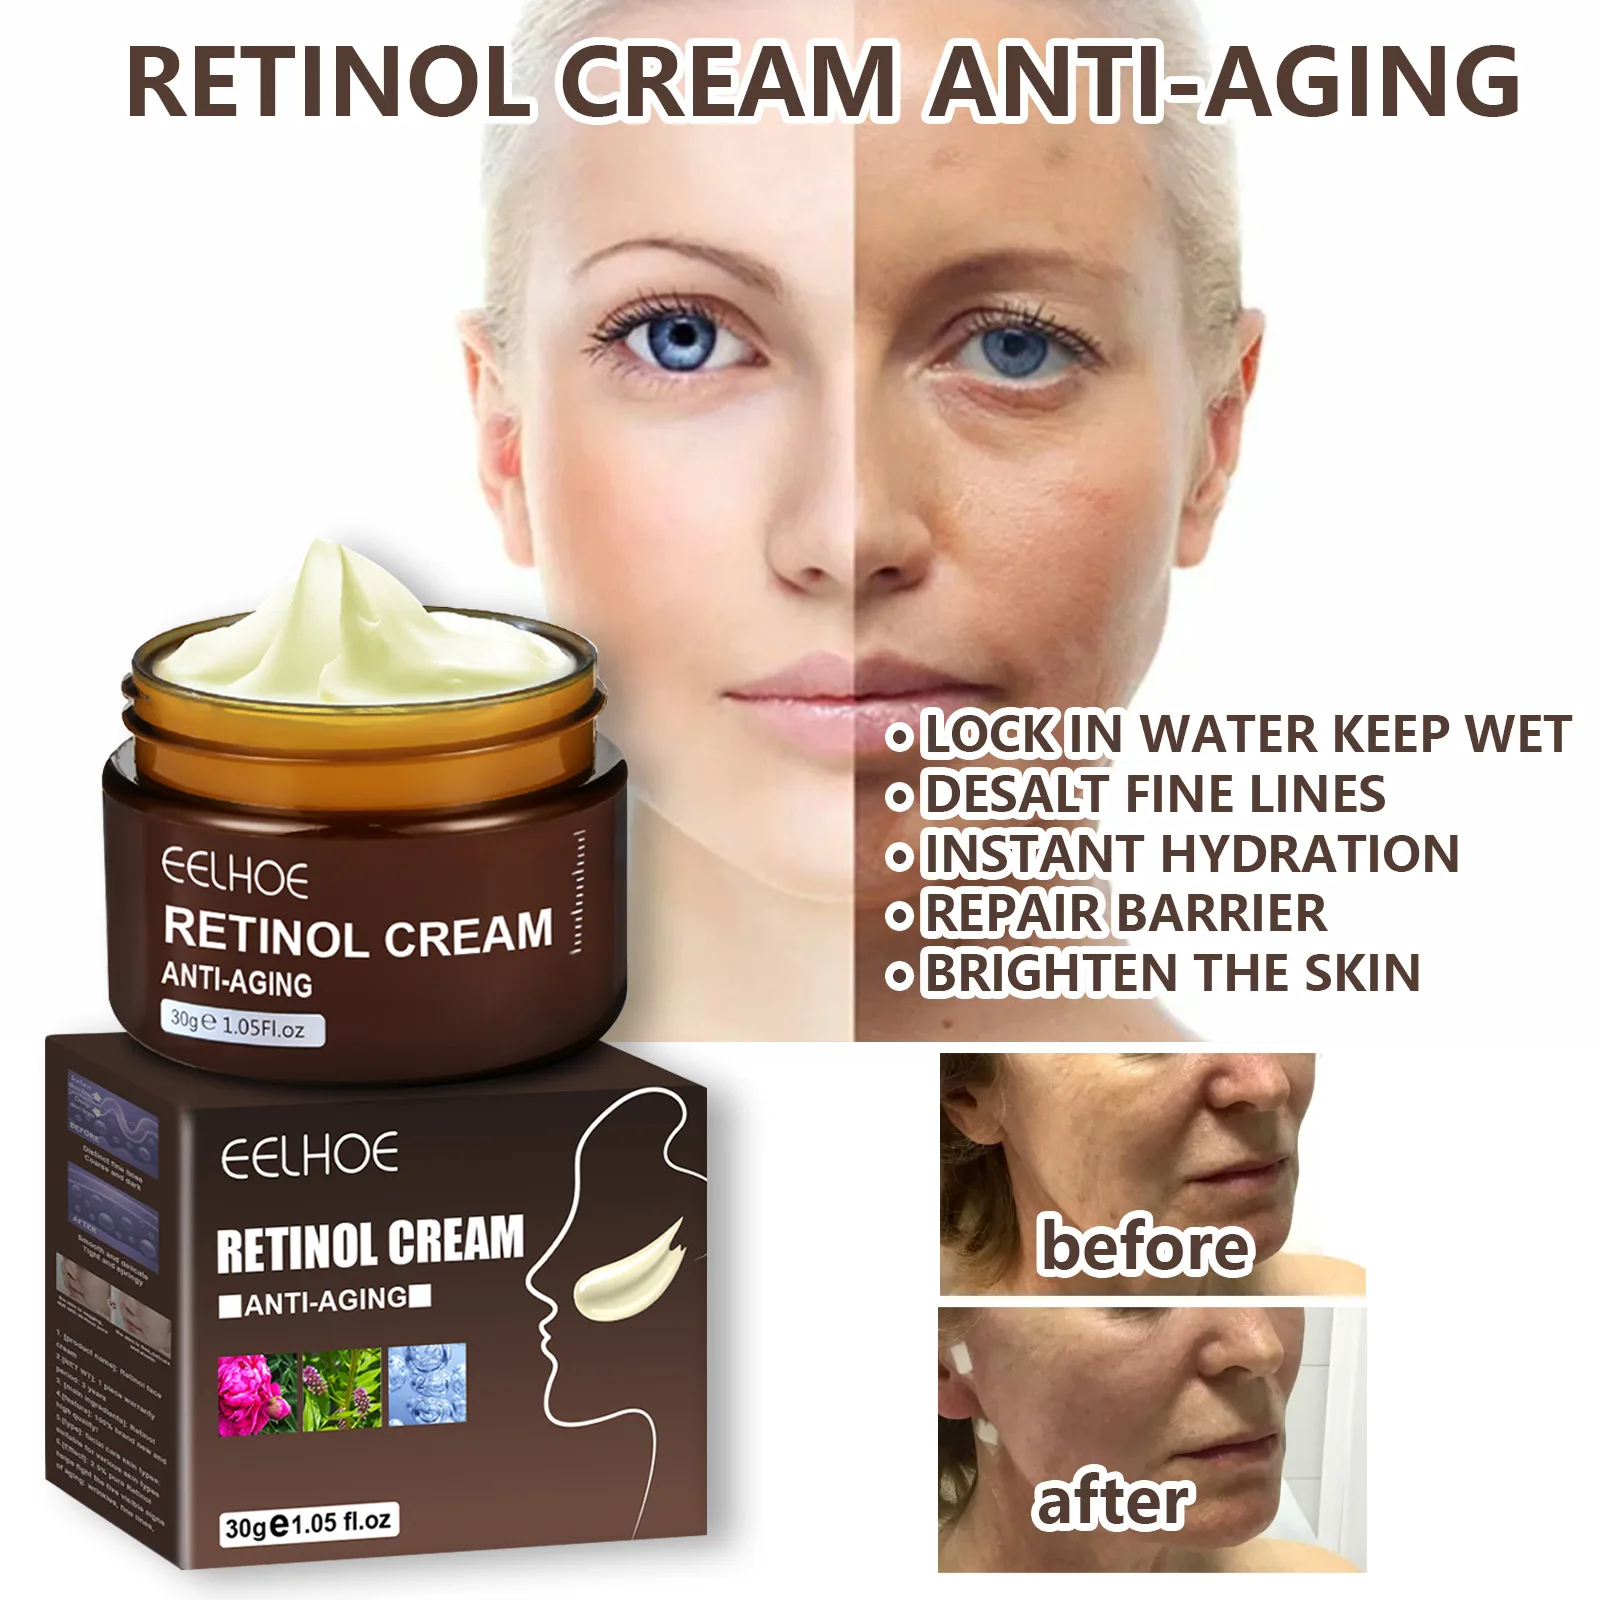 

Retinol Face Cream Anti-Aging Remove Wrinkle Firming Lifting Whitening Brightening Moisturizing Facial Skin Care Moisturizer